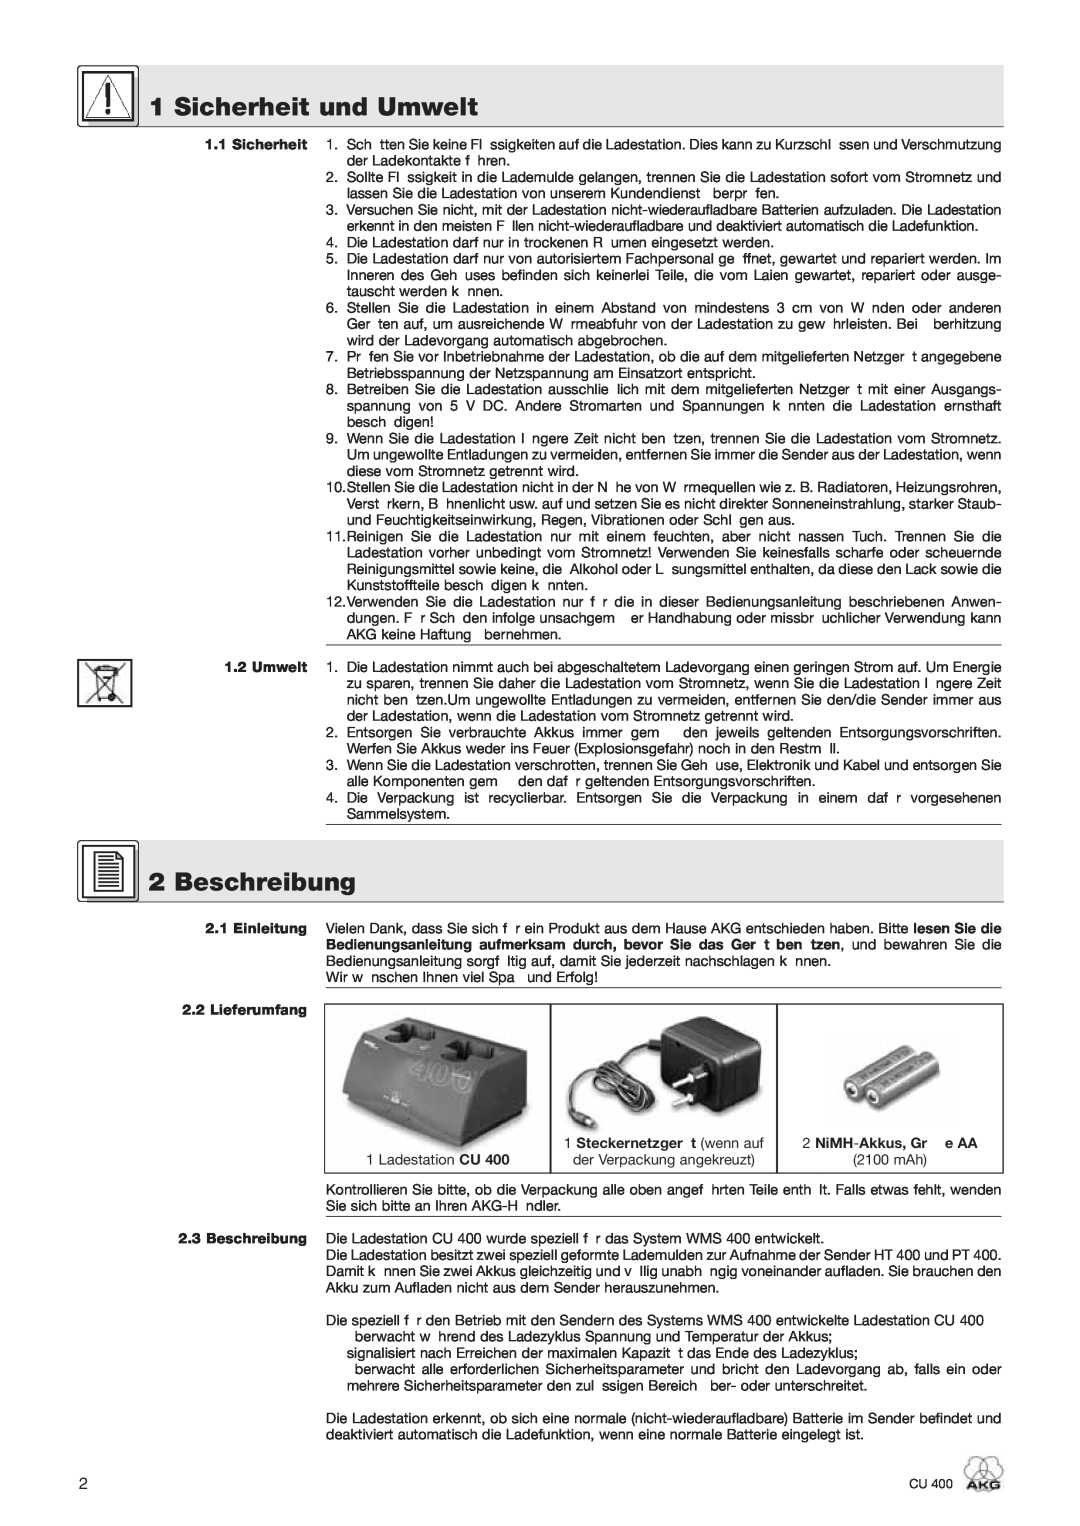 AKG Acoustics CU 400 manual Sicherheit und Umwelt, Beschreibung, 2.1Einleitung 2.2Lieferumfang, Ladestation CU 